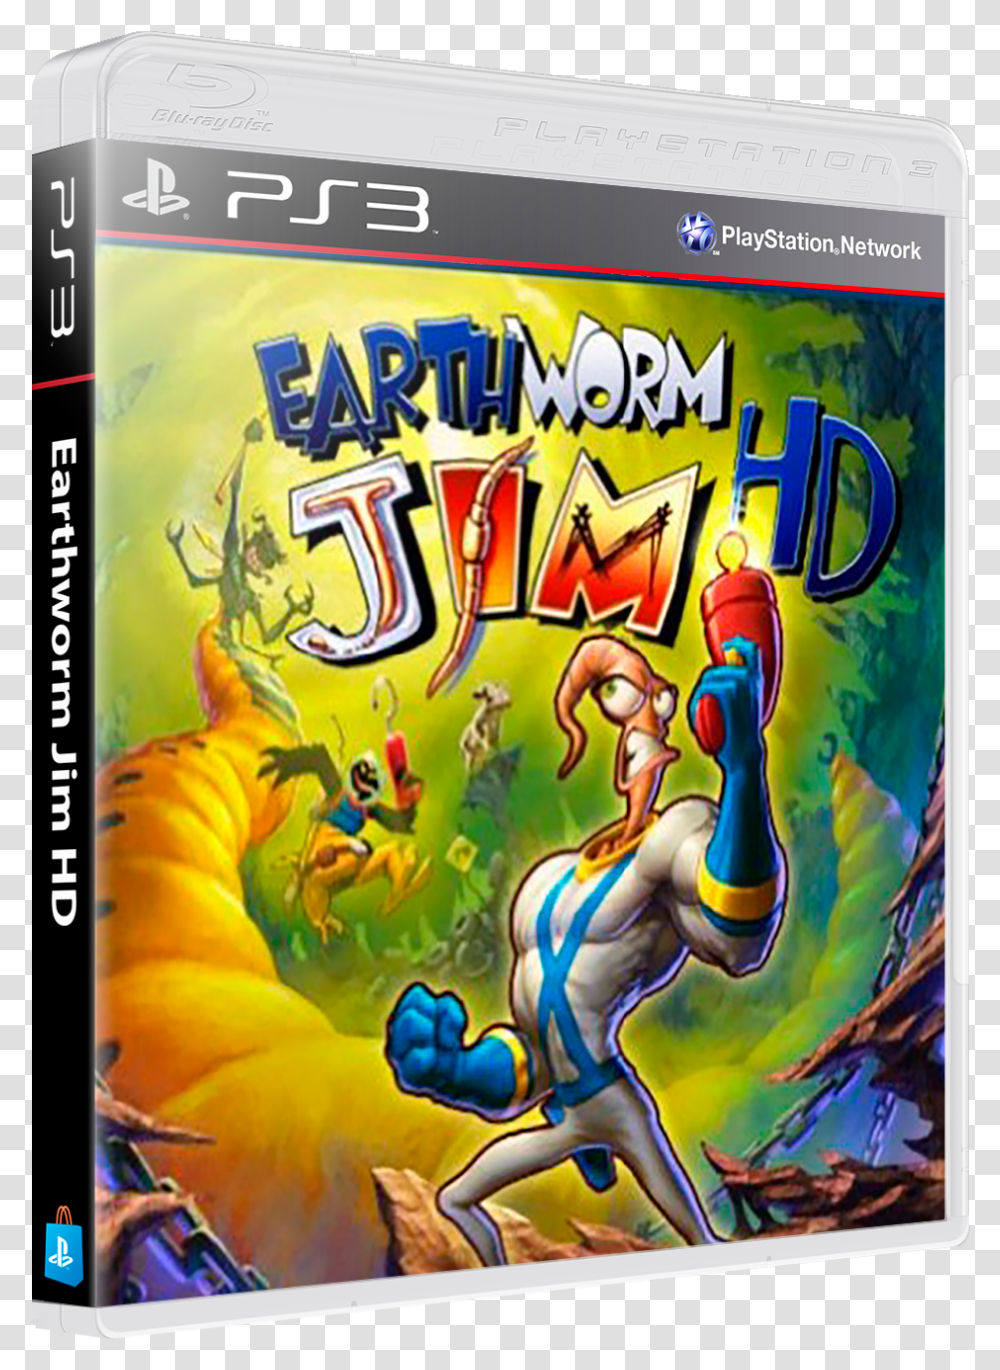 Earthworm jim ps3. Игра червяк Джим на ПС 3. Червяк Джим Xbox 360.